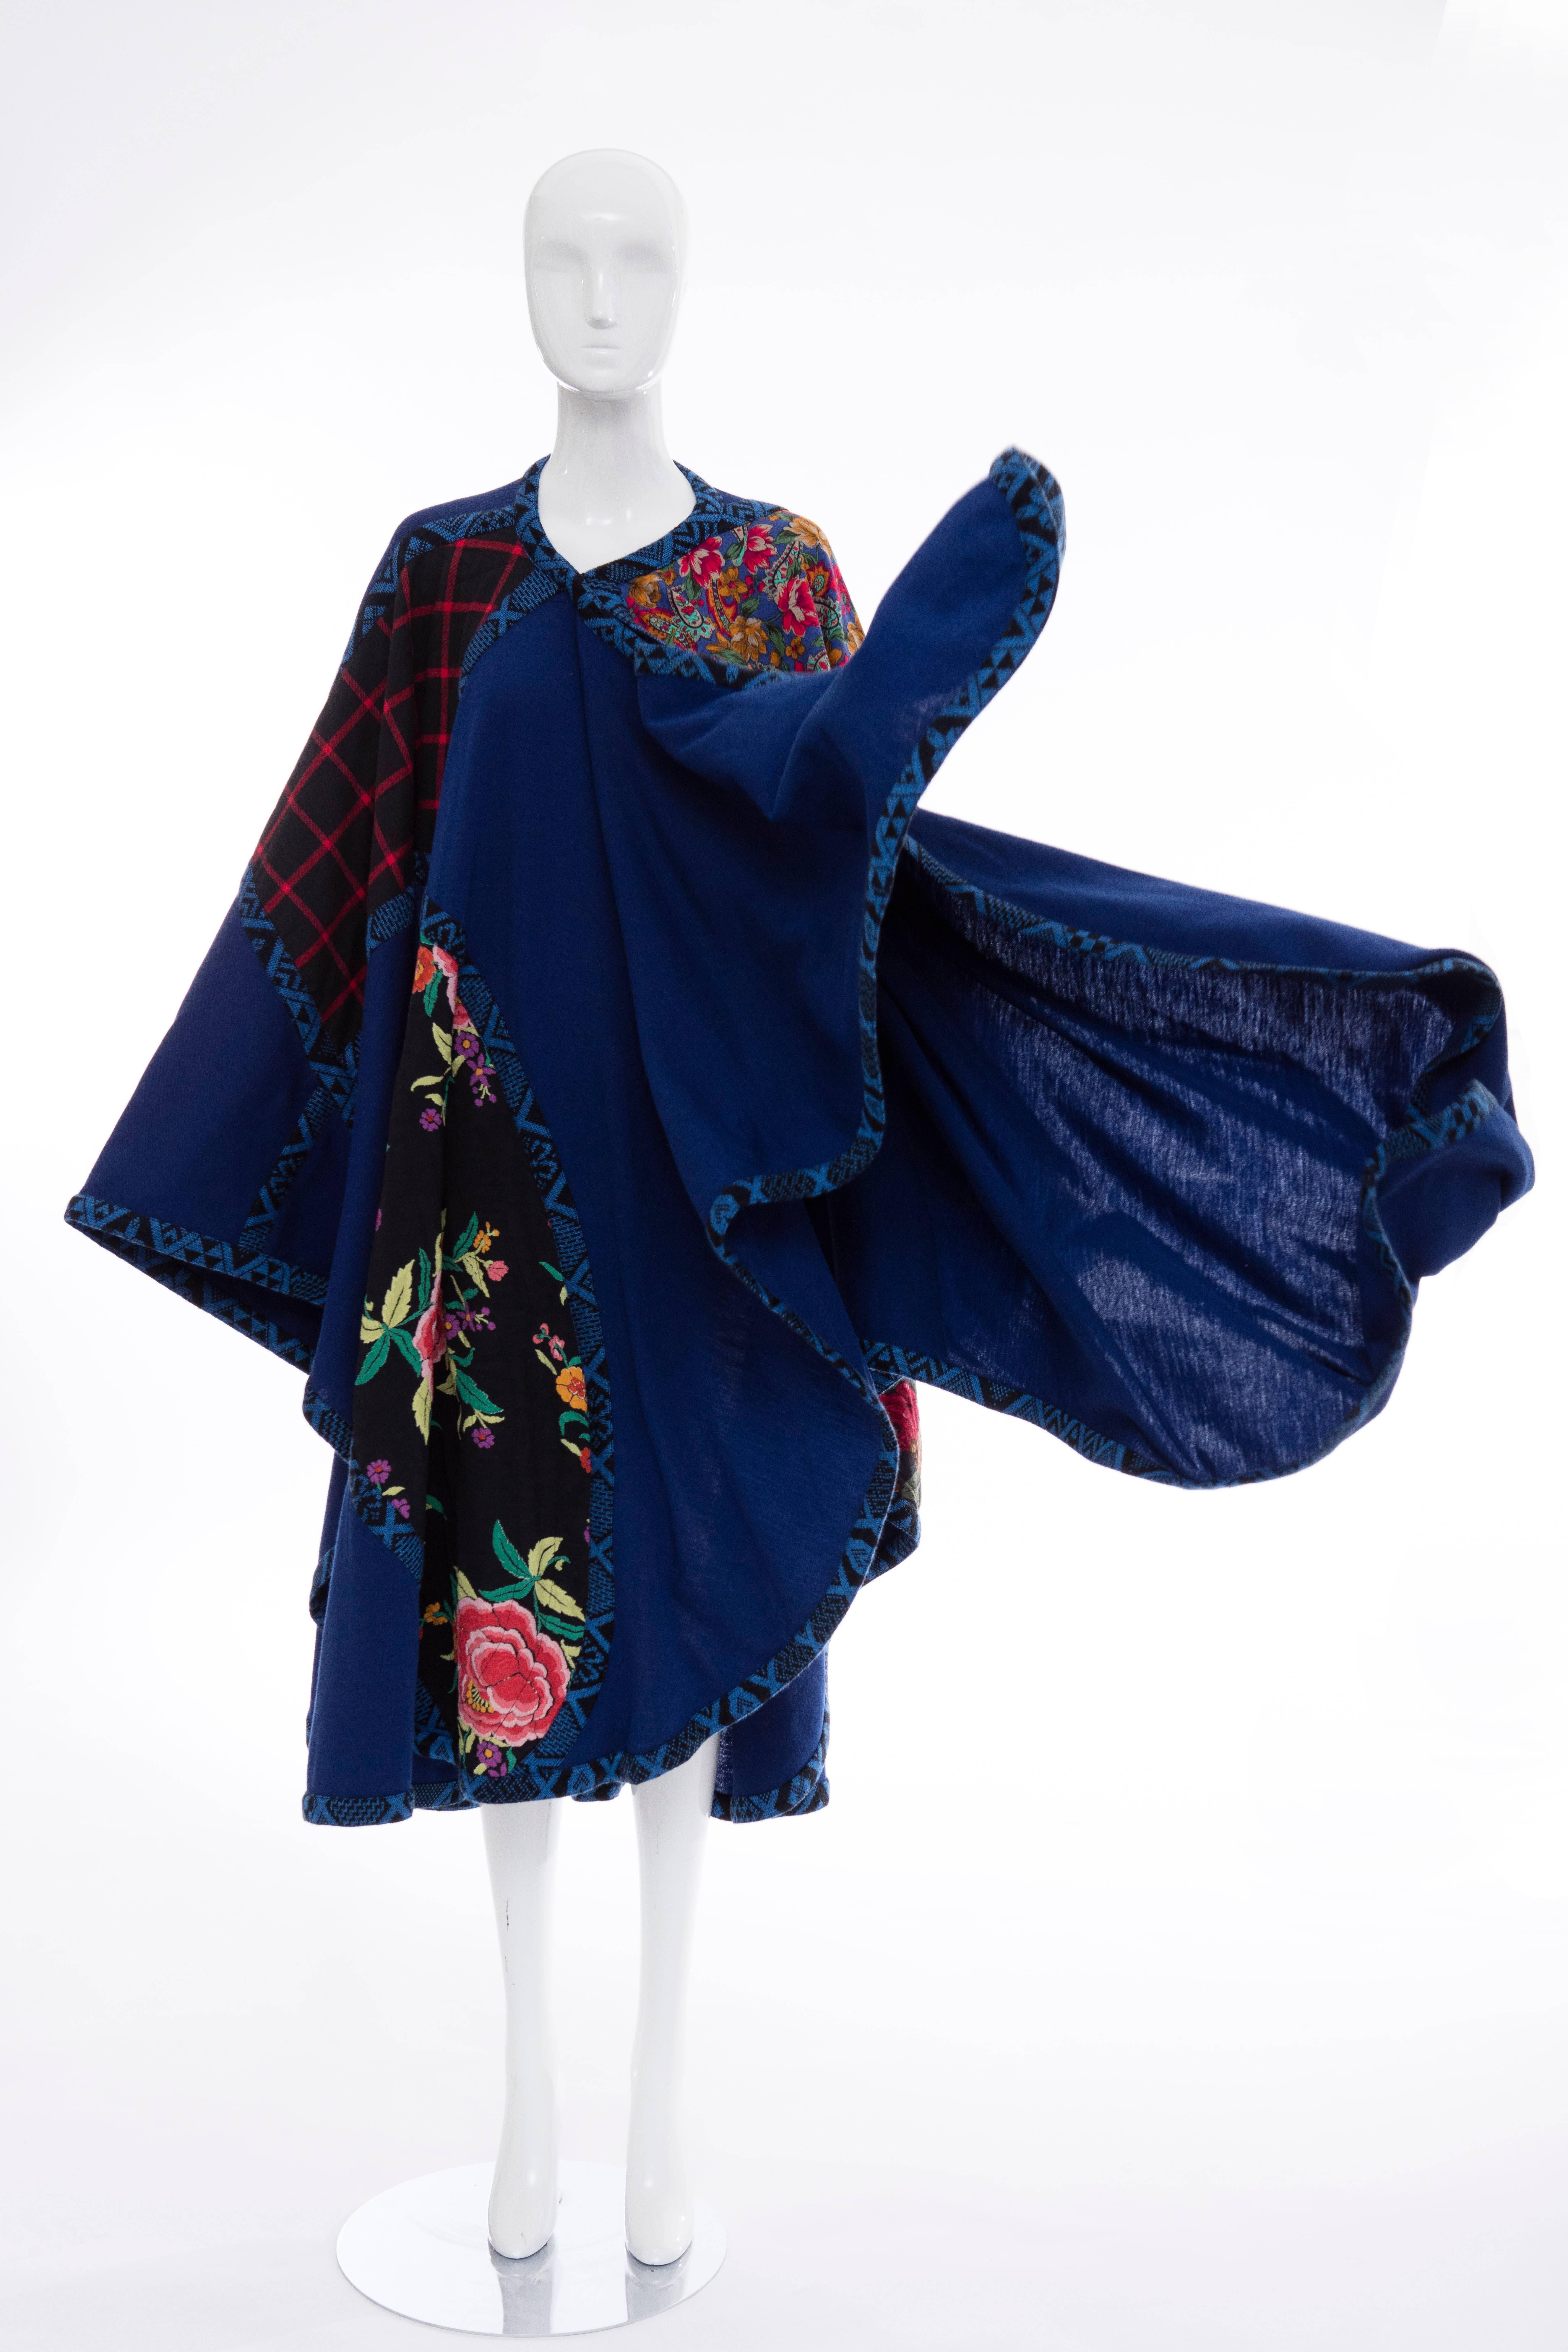 Koos Van Den Akker Royal Blue Cloak With Floral Quilted Patchwork, Circa 1980's 4